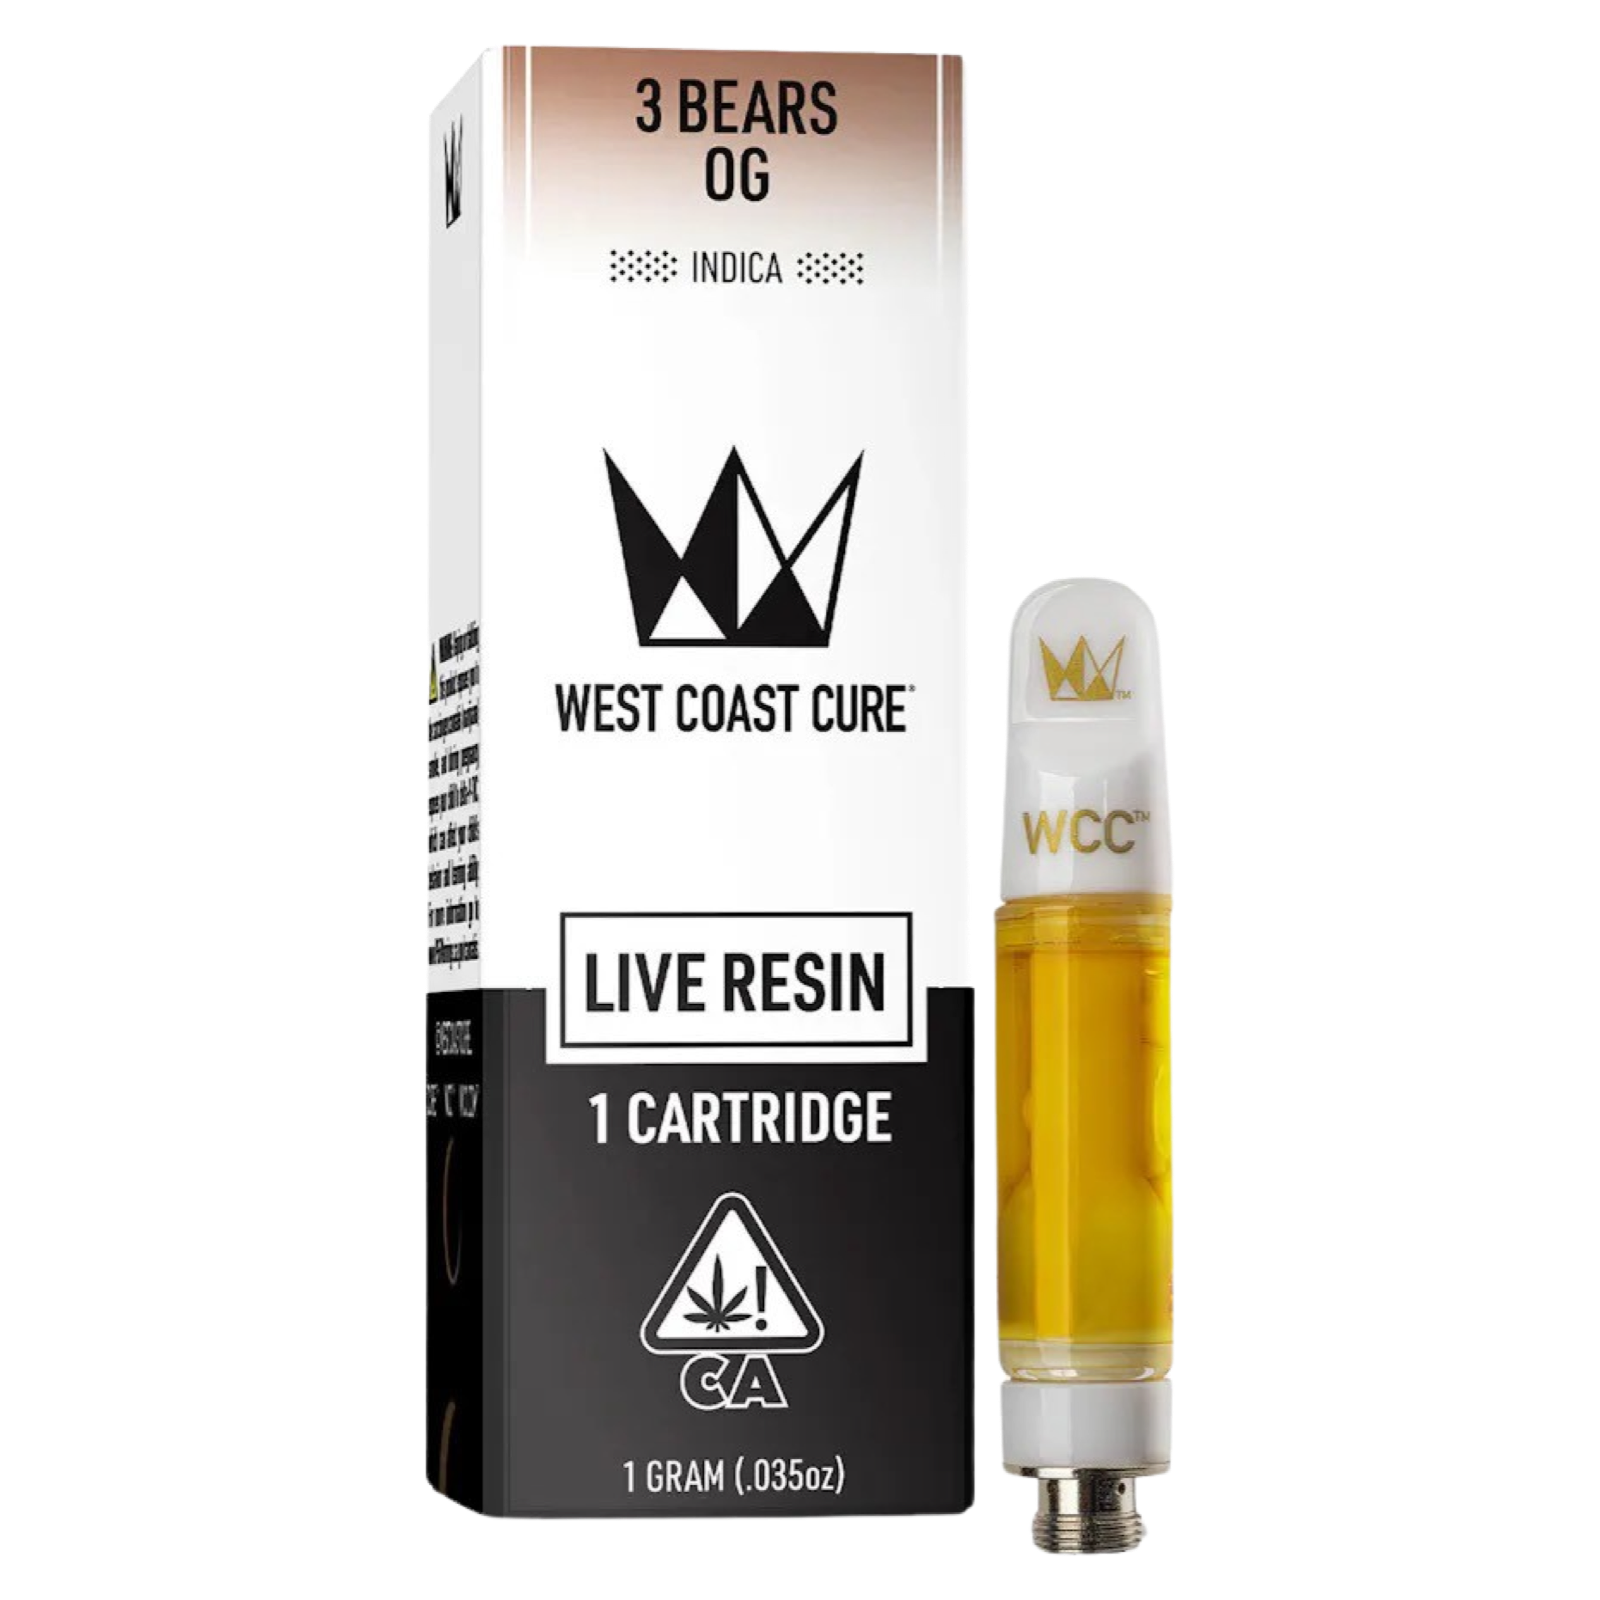 3 Bears OG | West Coast Cure Live Resin Cartridge | 1G | Indica